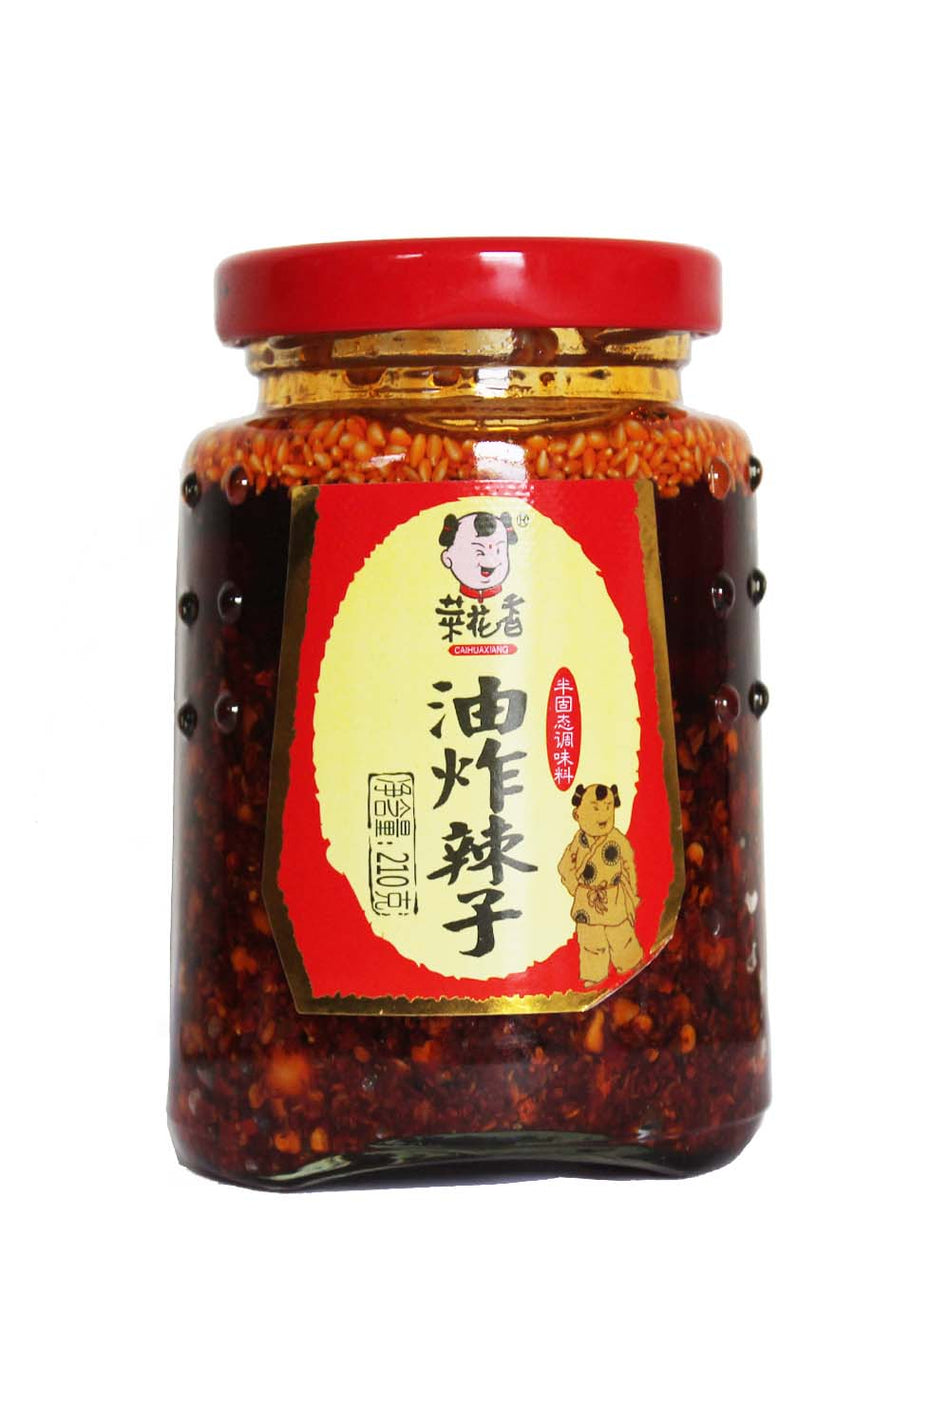 Cai Hua Xiang Chili oil sauce